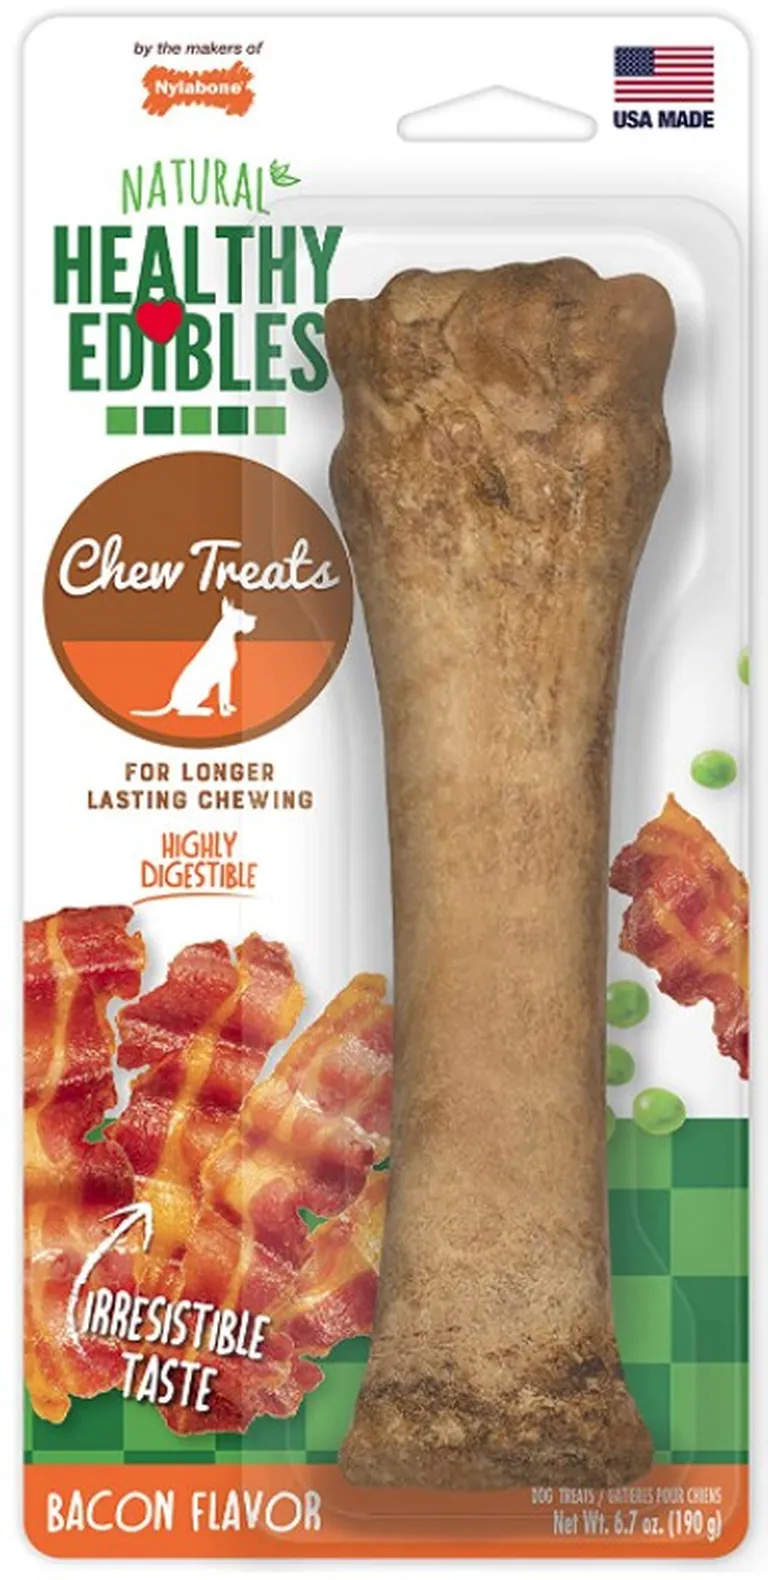 Nylabone Healthy Edibles Wholesome Dog Chews - Bacon Flavor Photo 1